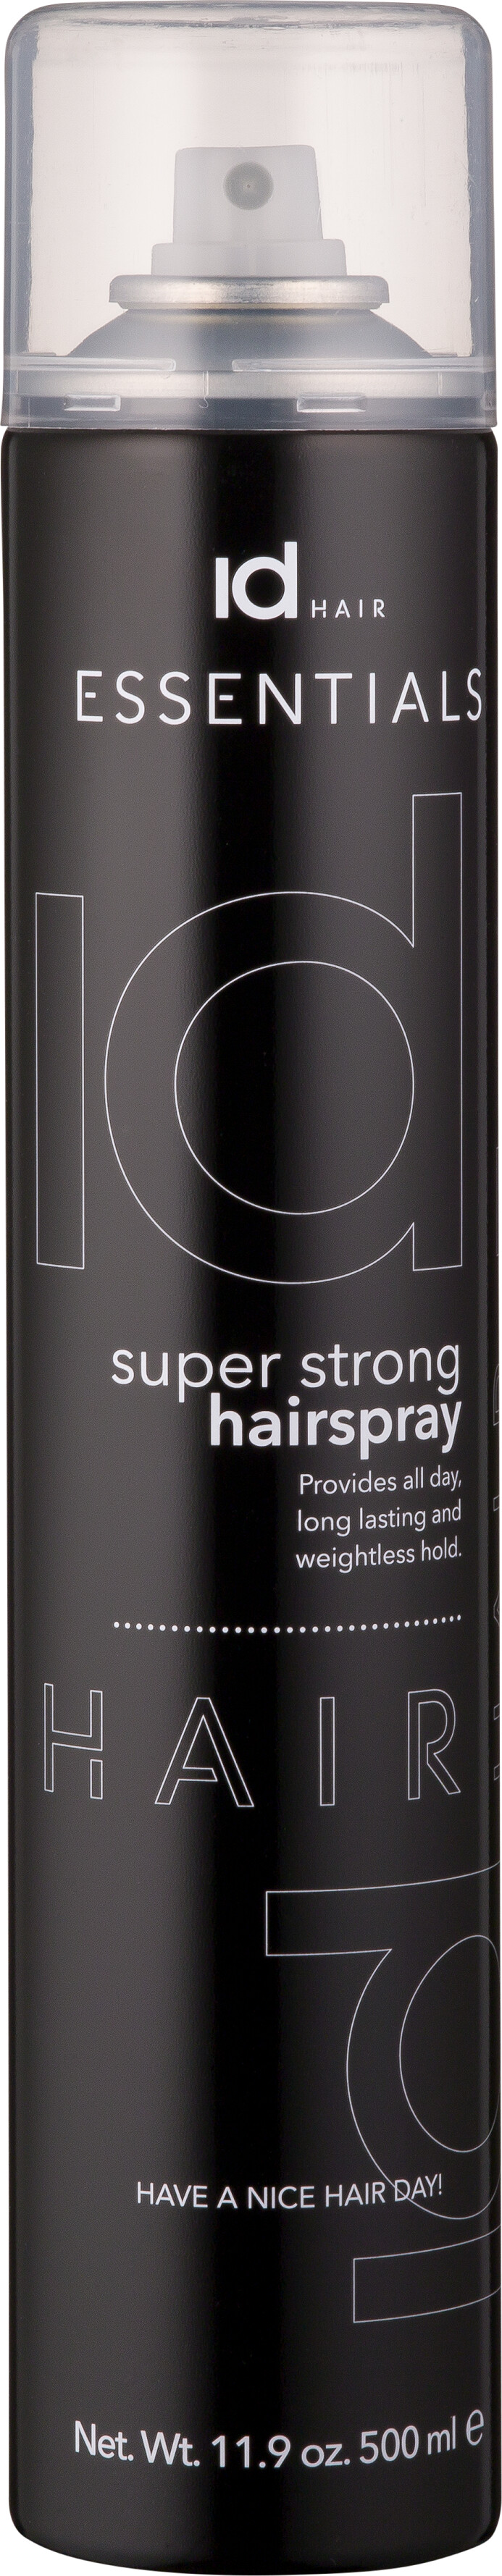 Billede af Id Hair - Essentials Super Strong Hair Spray 500 Ml hos Gucca.dk